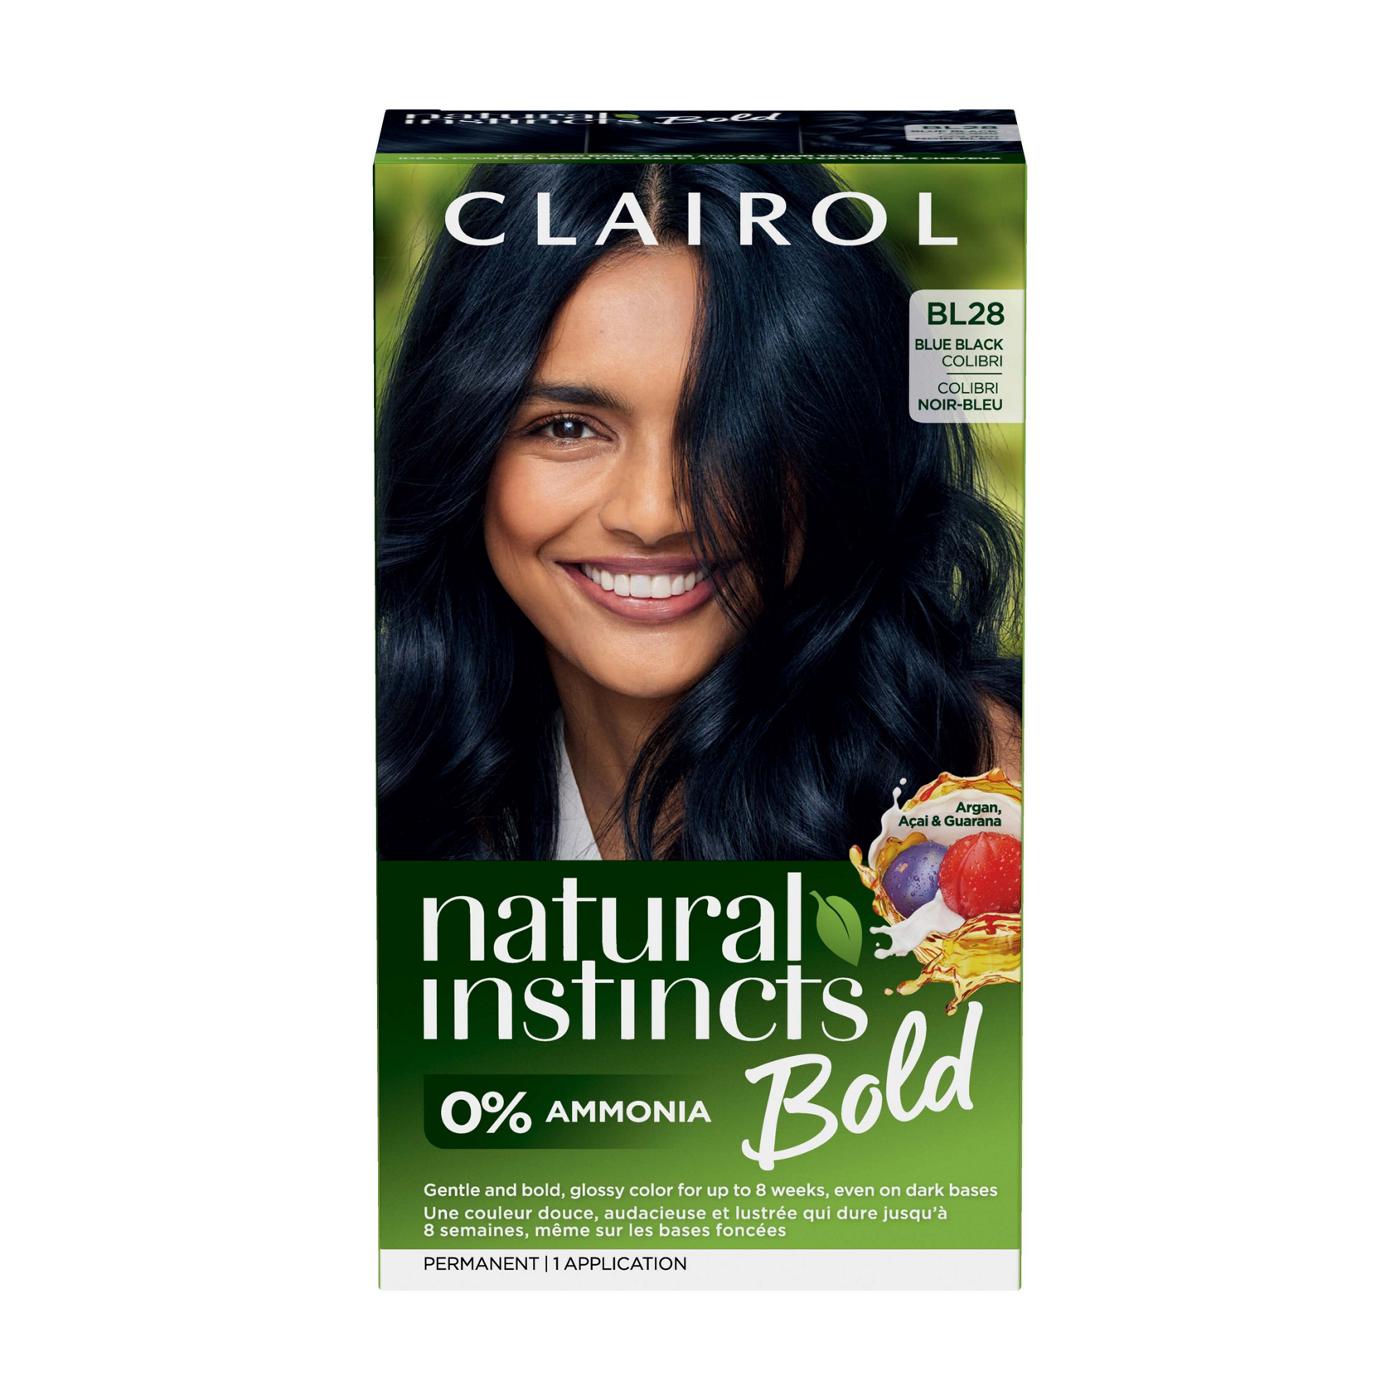 Clairol Natural Instincts Bold Permanent Hair Color - BL28 Blue Black Colibri ; image 1 of 6